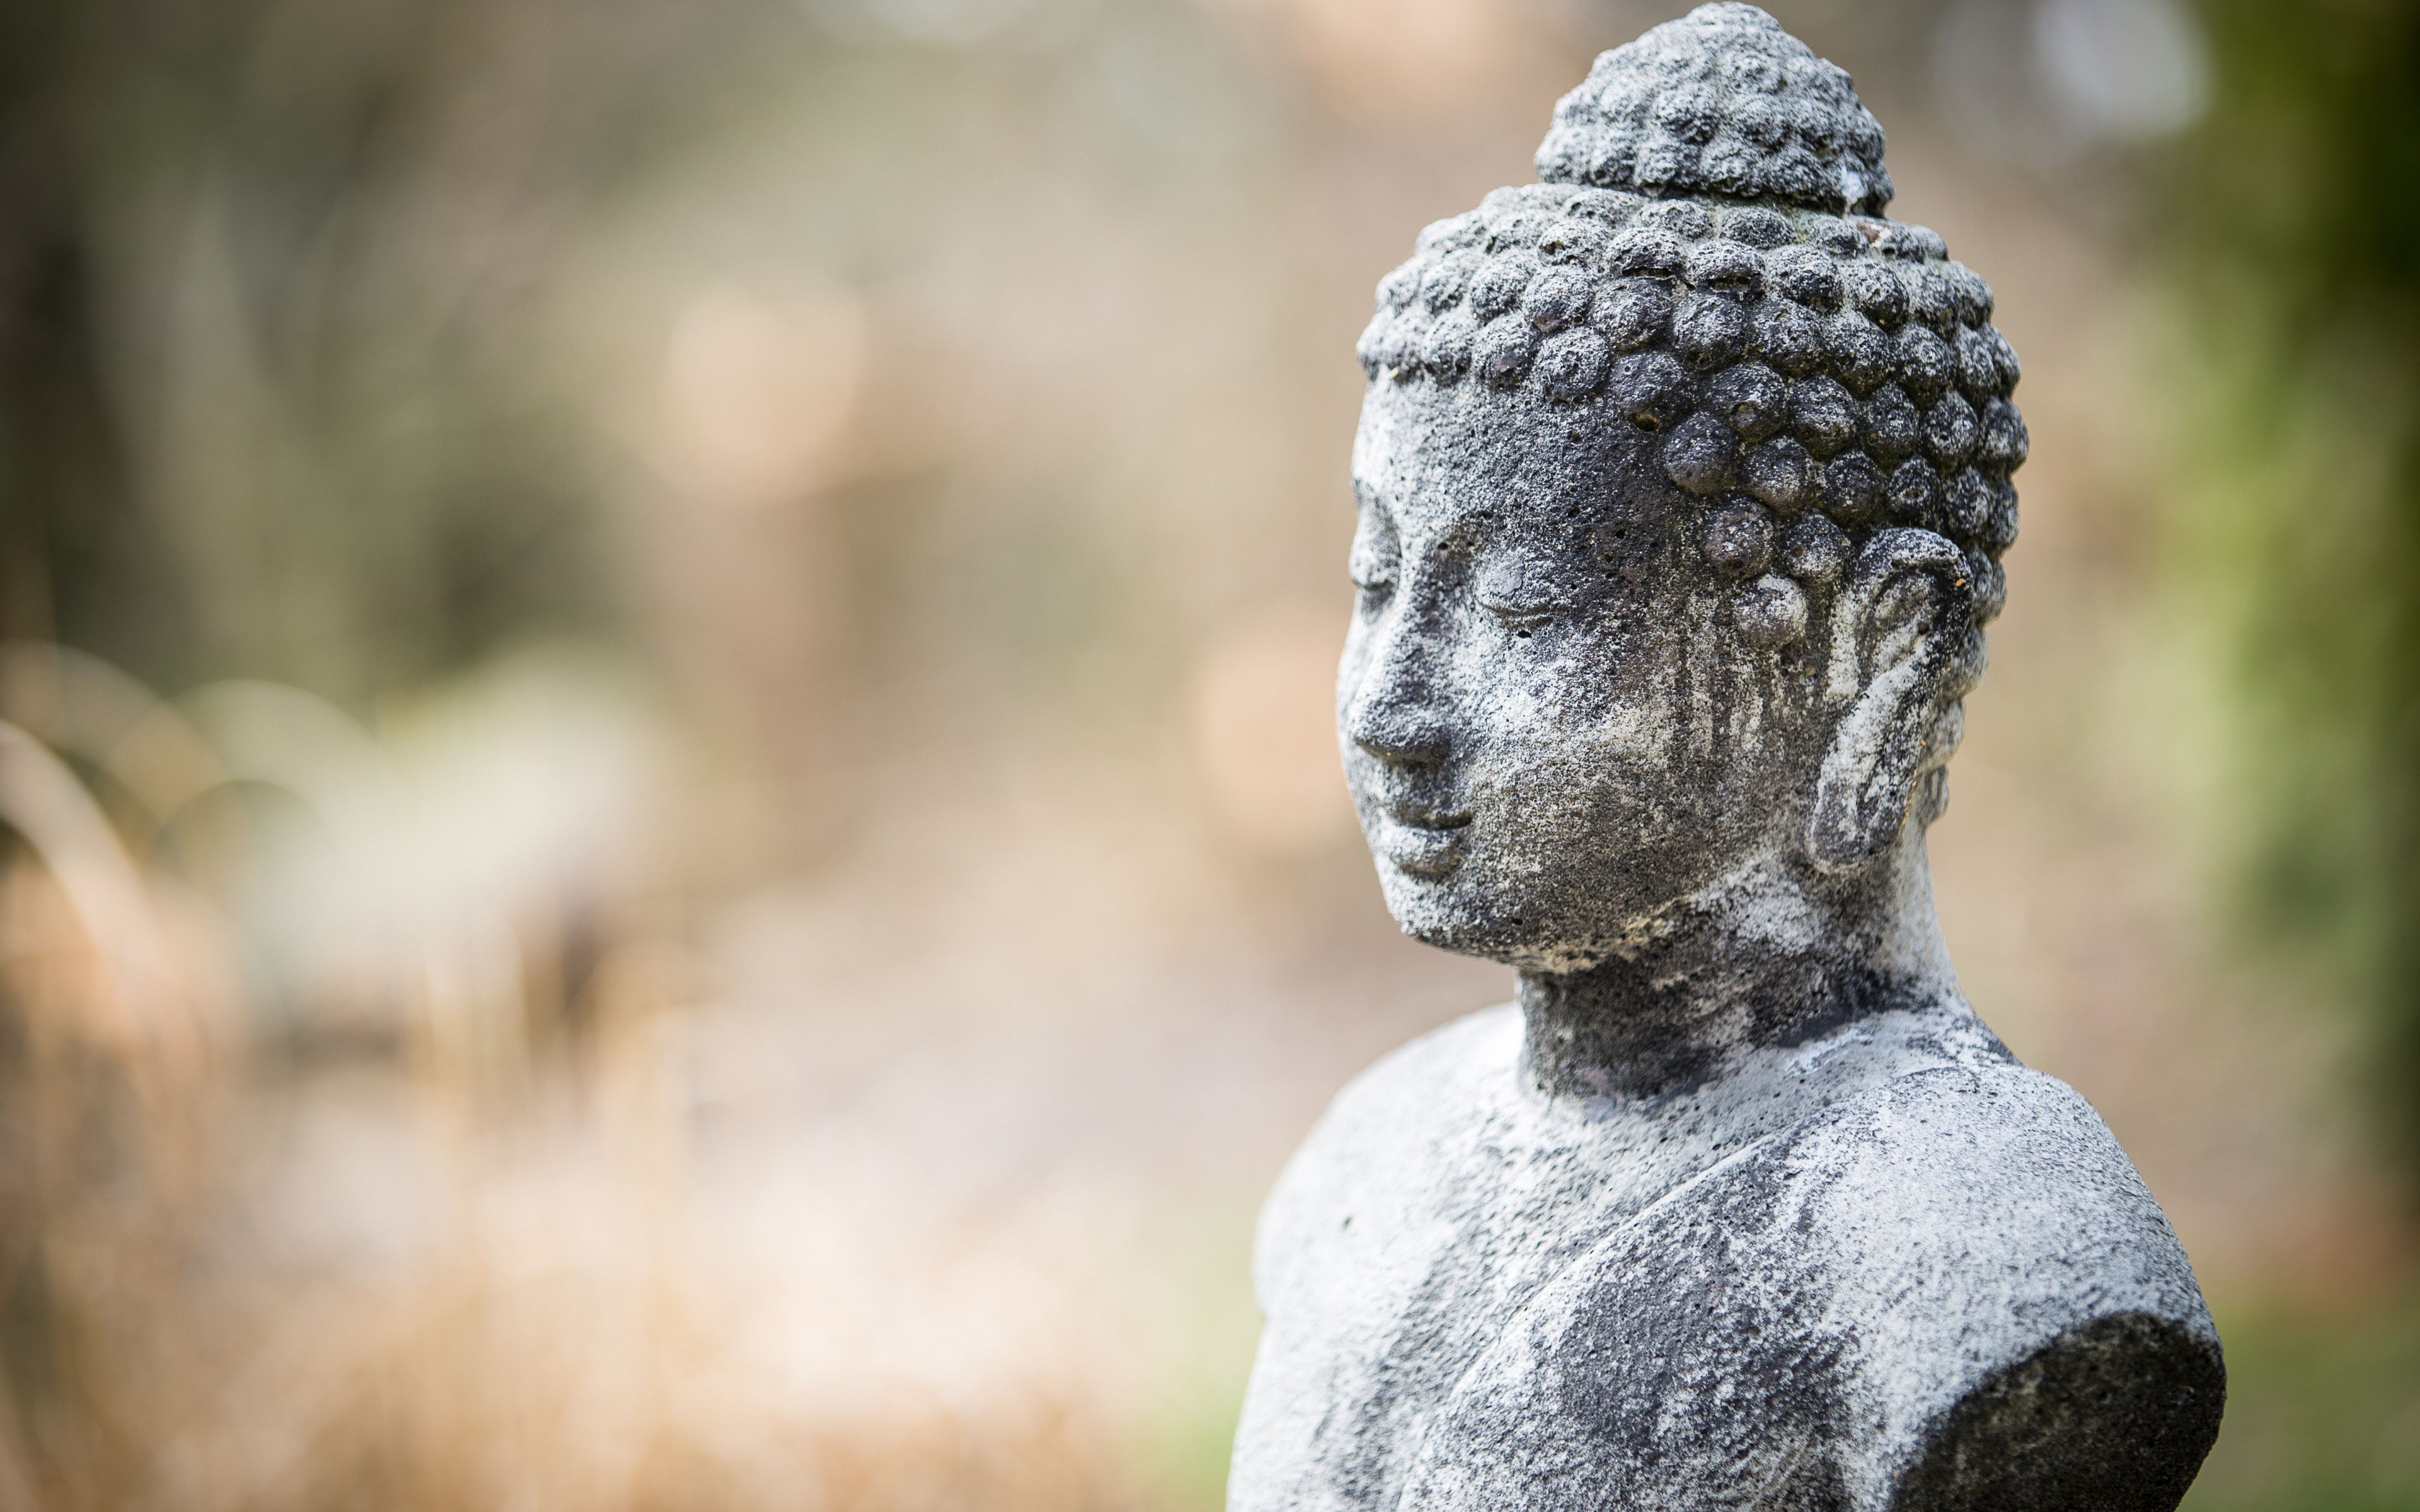 Desktop Wallpaper Statue Of Buddha Doing Meditation, HD Image, Picture, Background, E54g4k